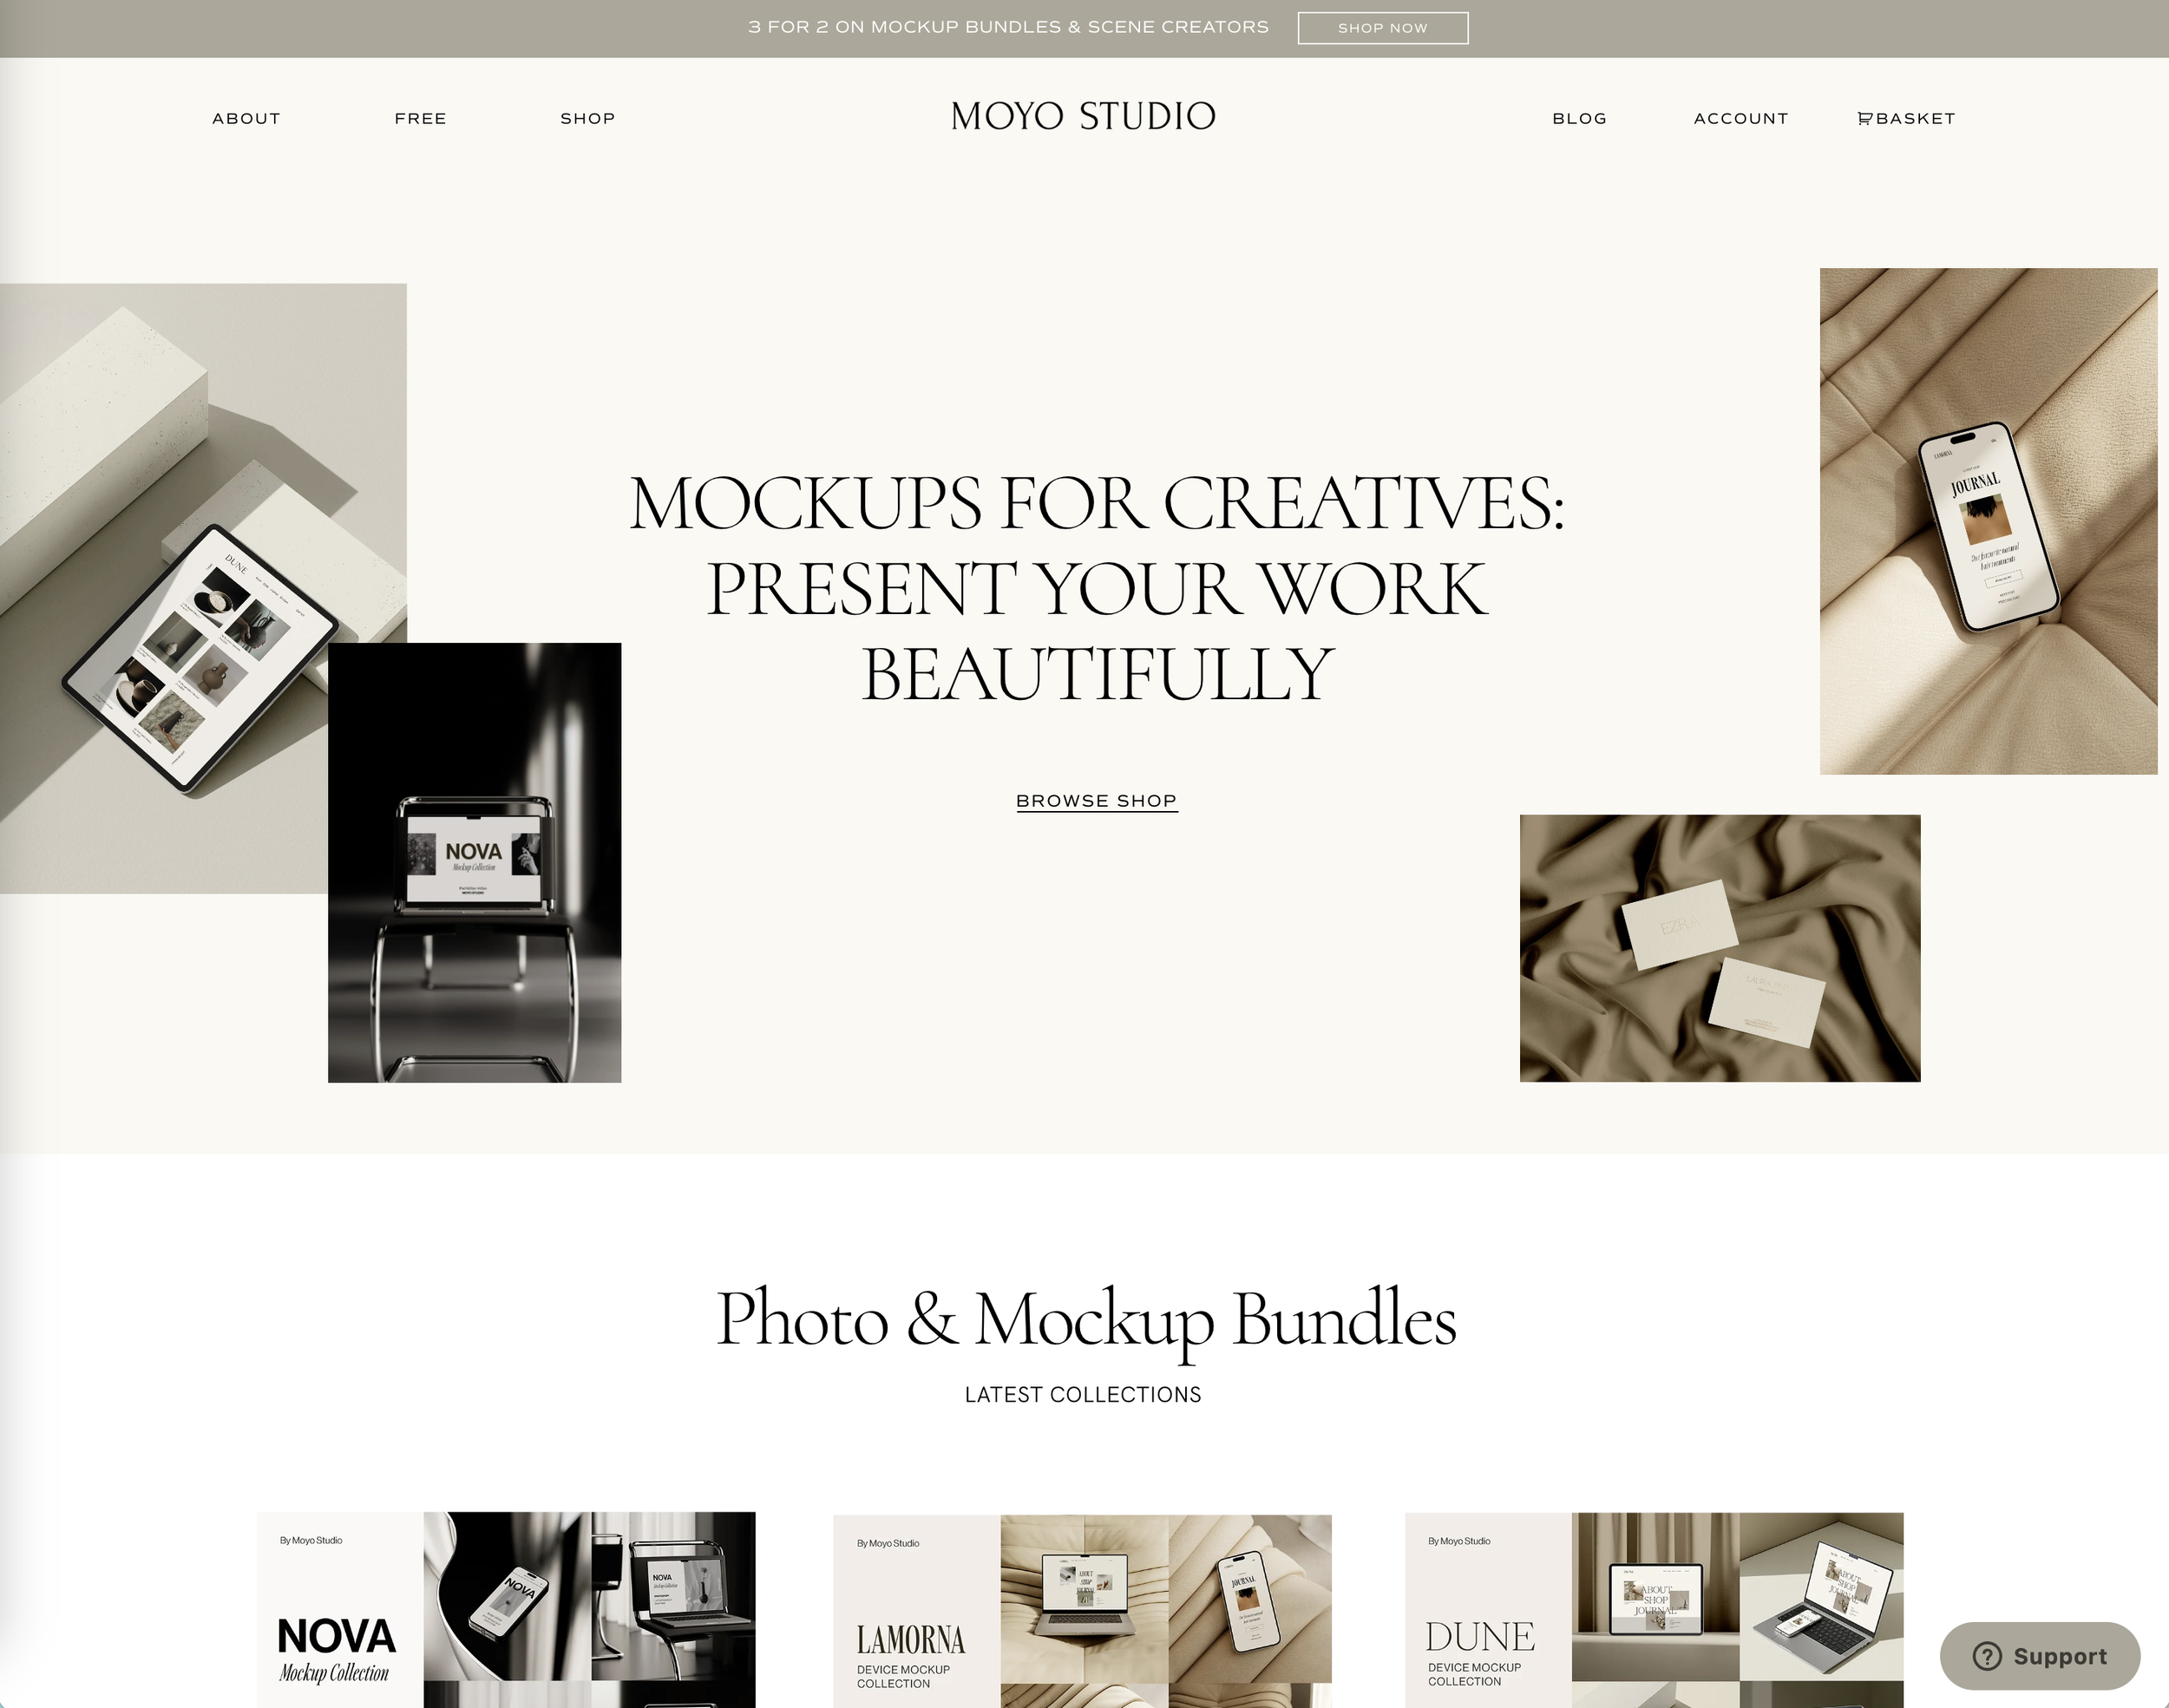 moyo studio design business needs a website